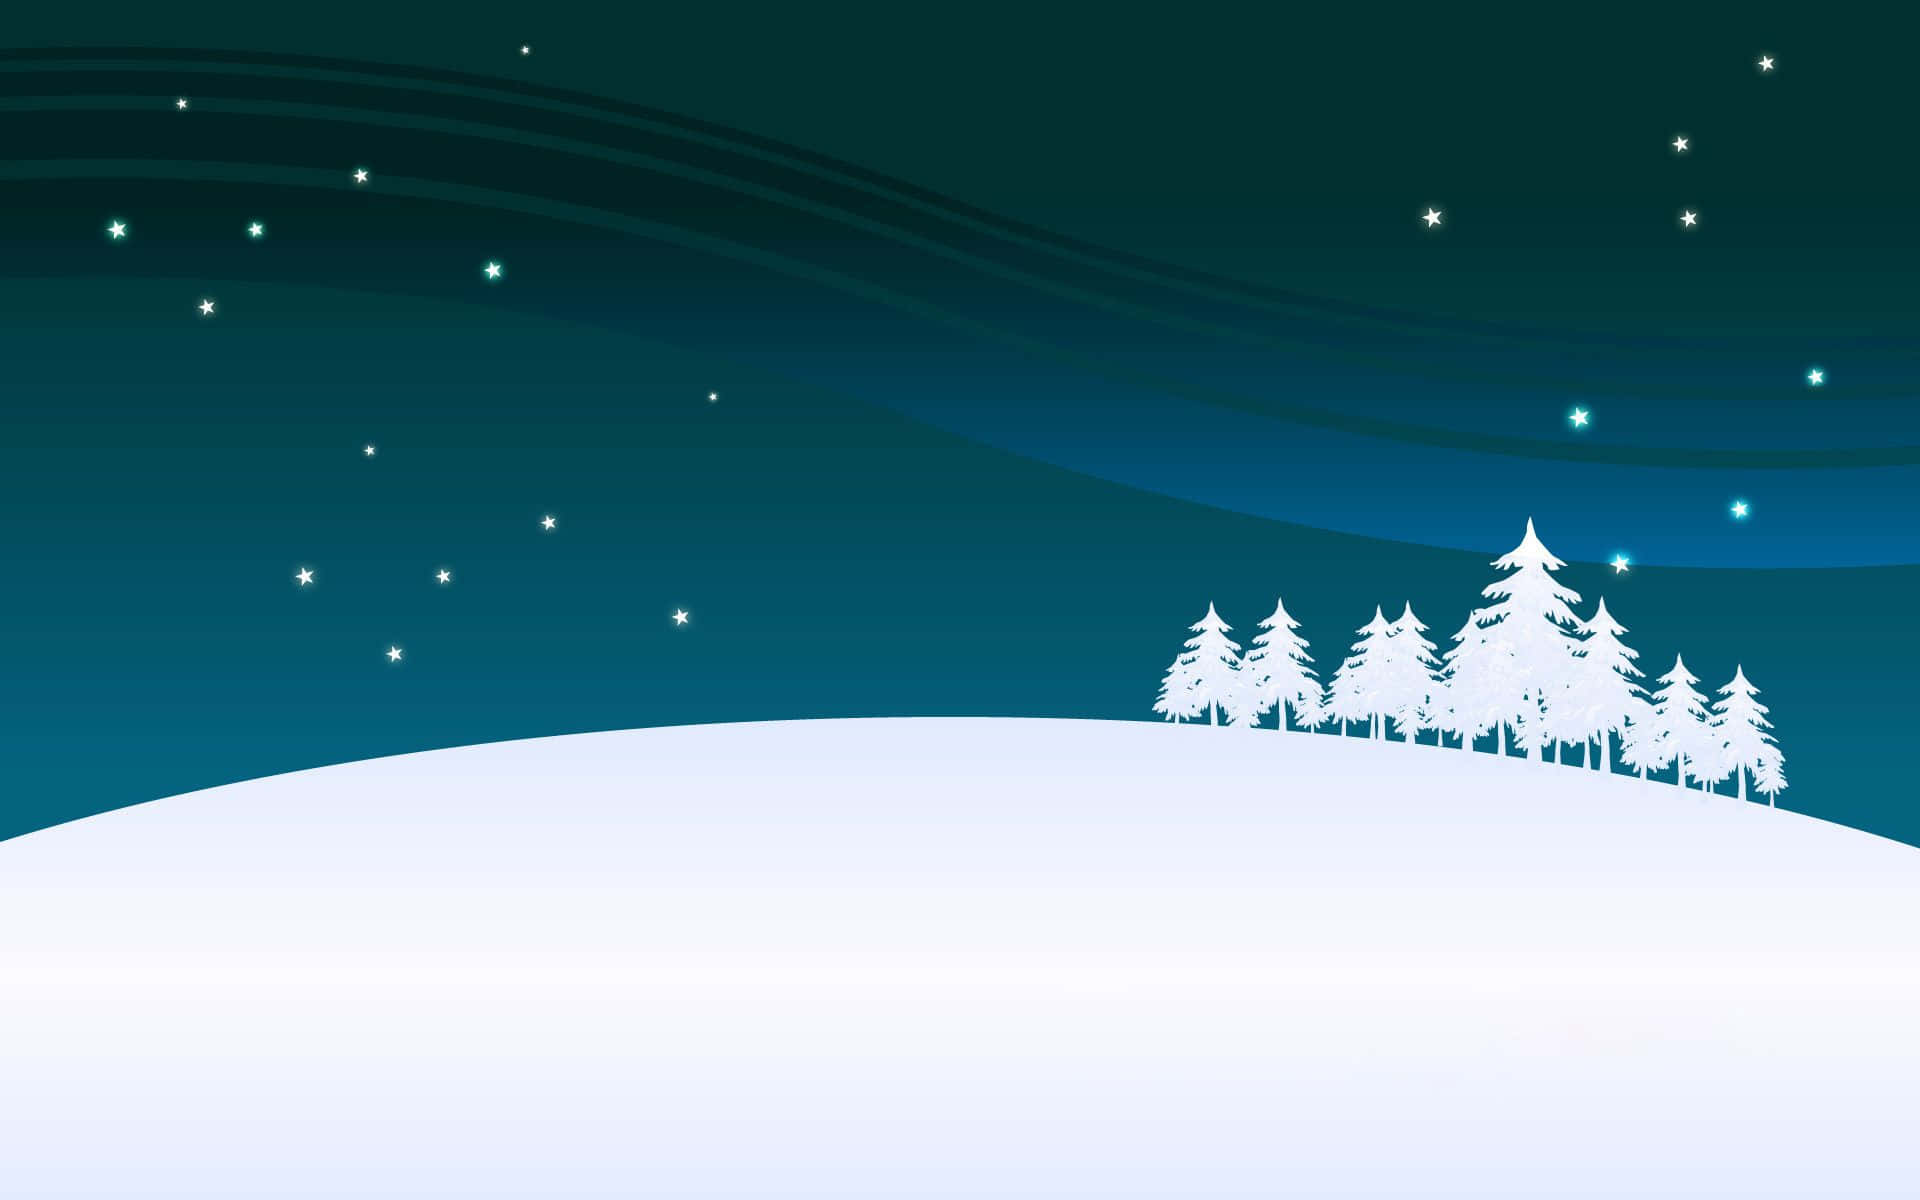 Enchanting Winter Holiday Scene Wallpaper